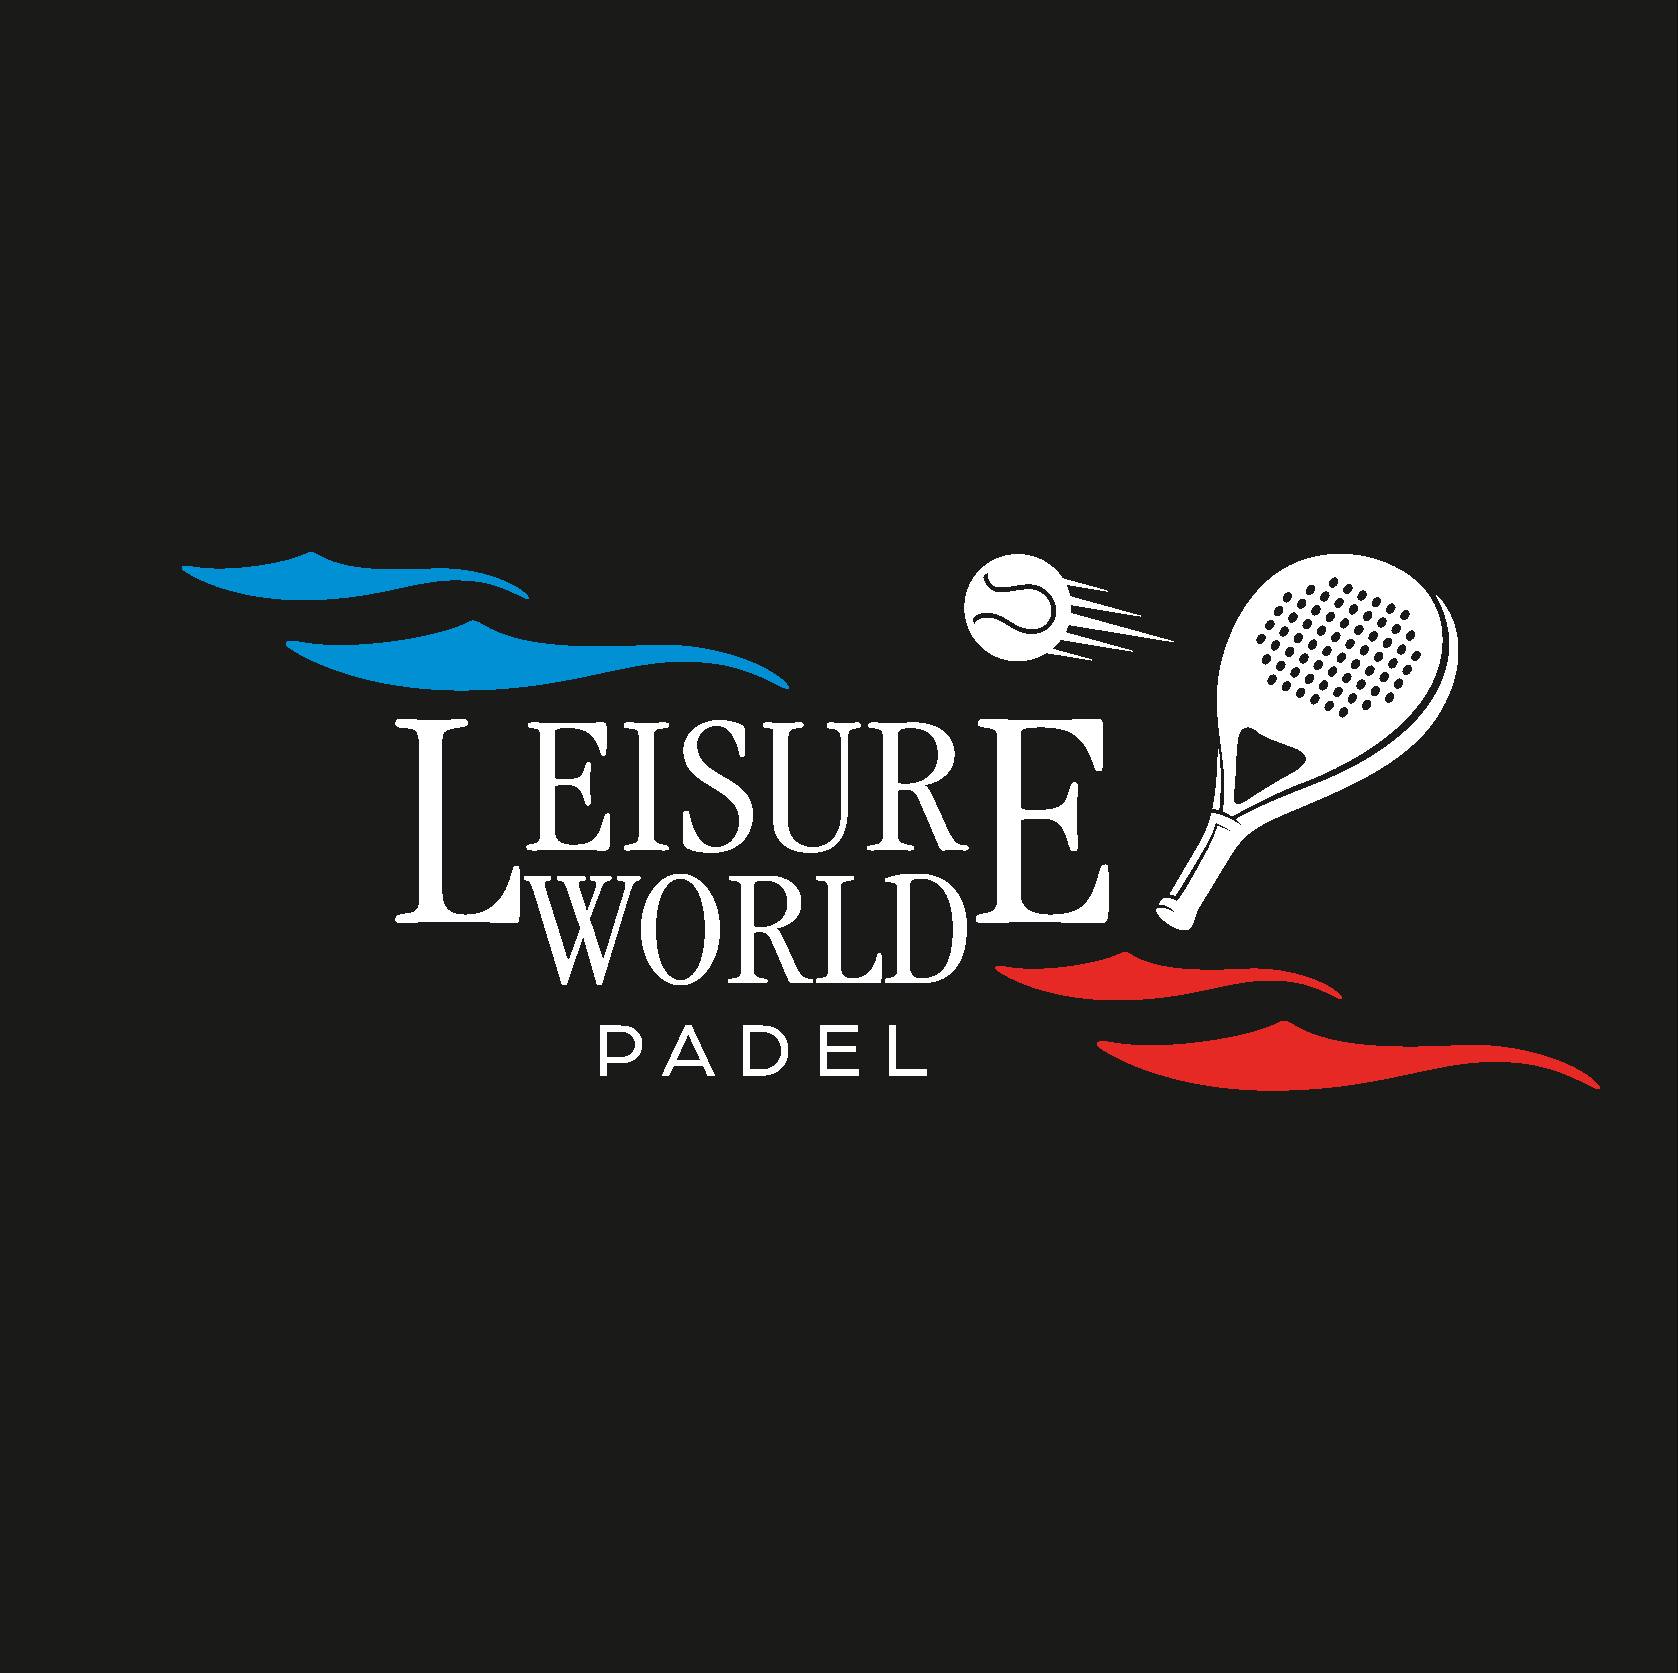 Profile image of venue Leisure World Padel